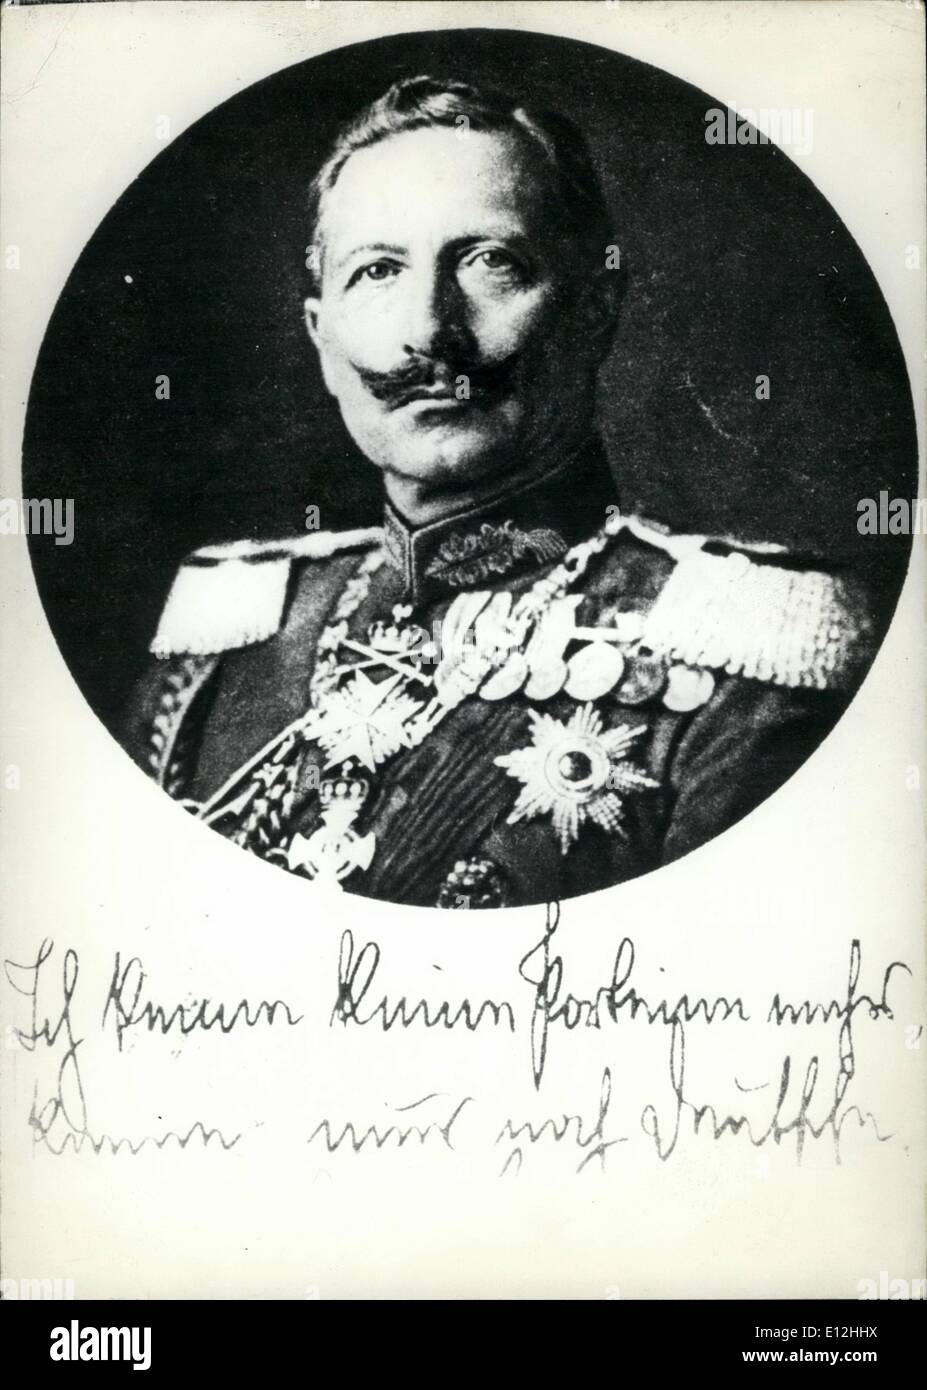 El 24 de febrero, 2012 - UBZ: Kaiser Wilhelm II. keystone Bild vom 30.11.62 Foto de stock